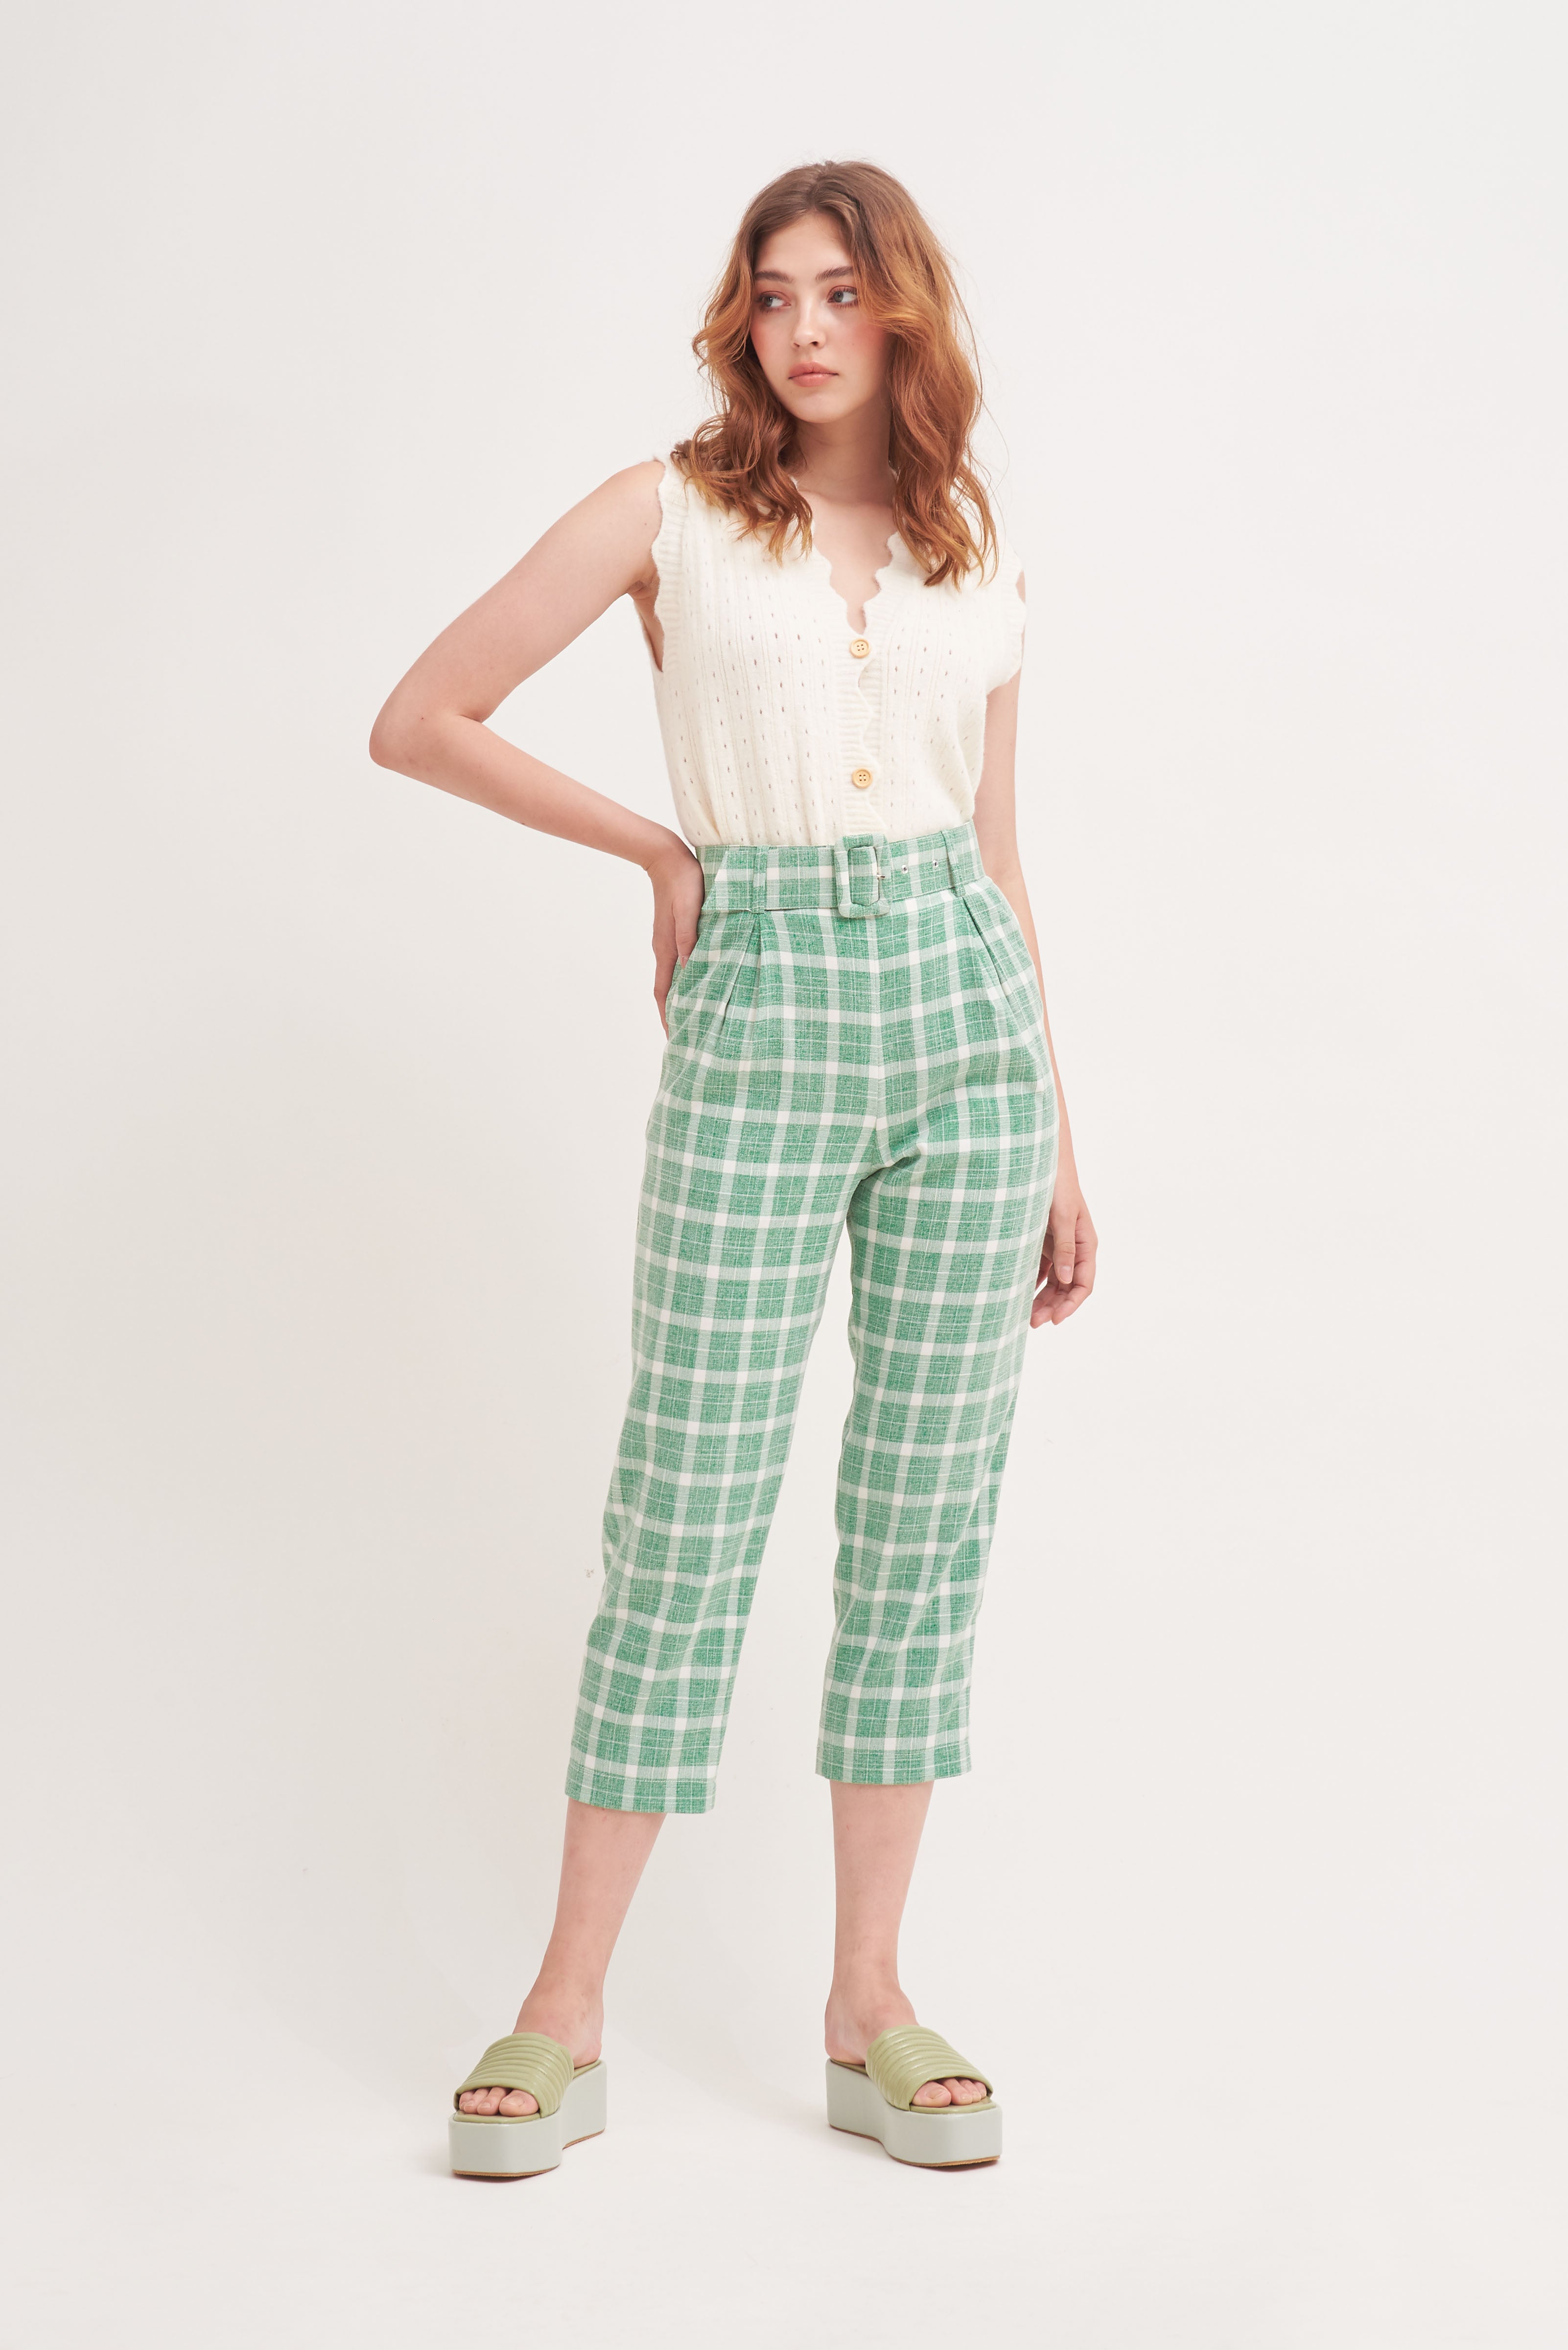 Top more than 85 light green plaid pants super hot - in.eteachers